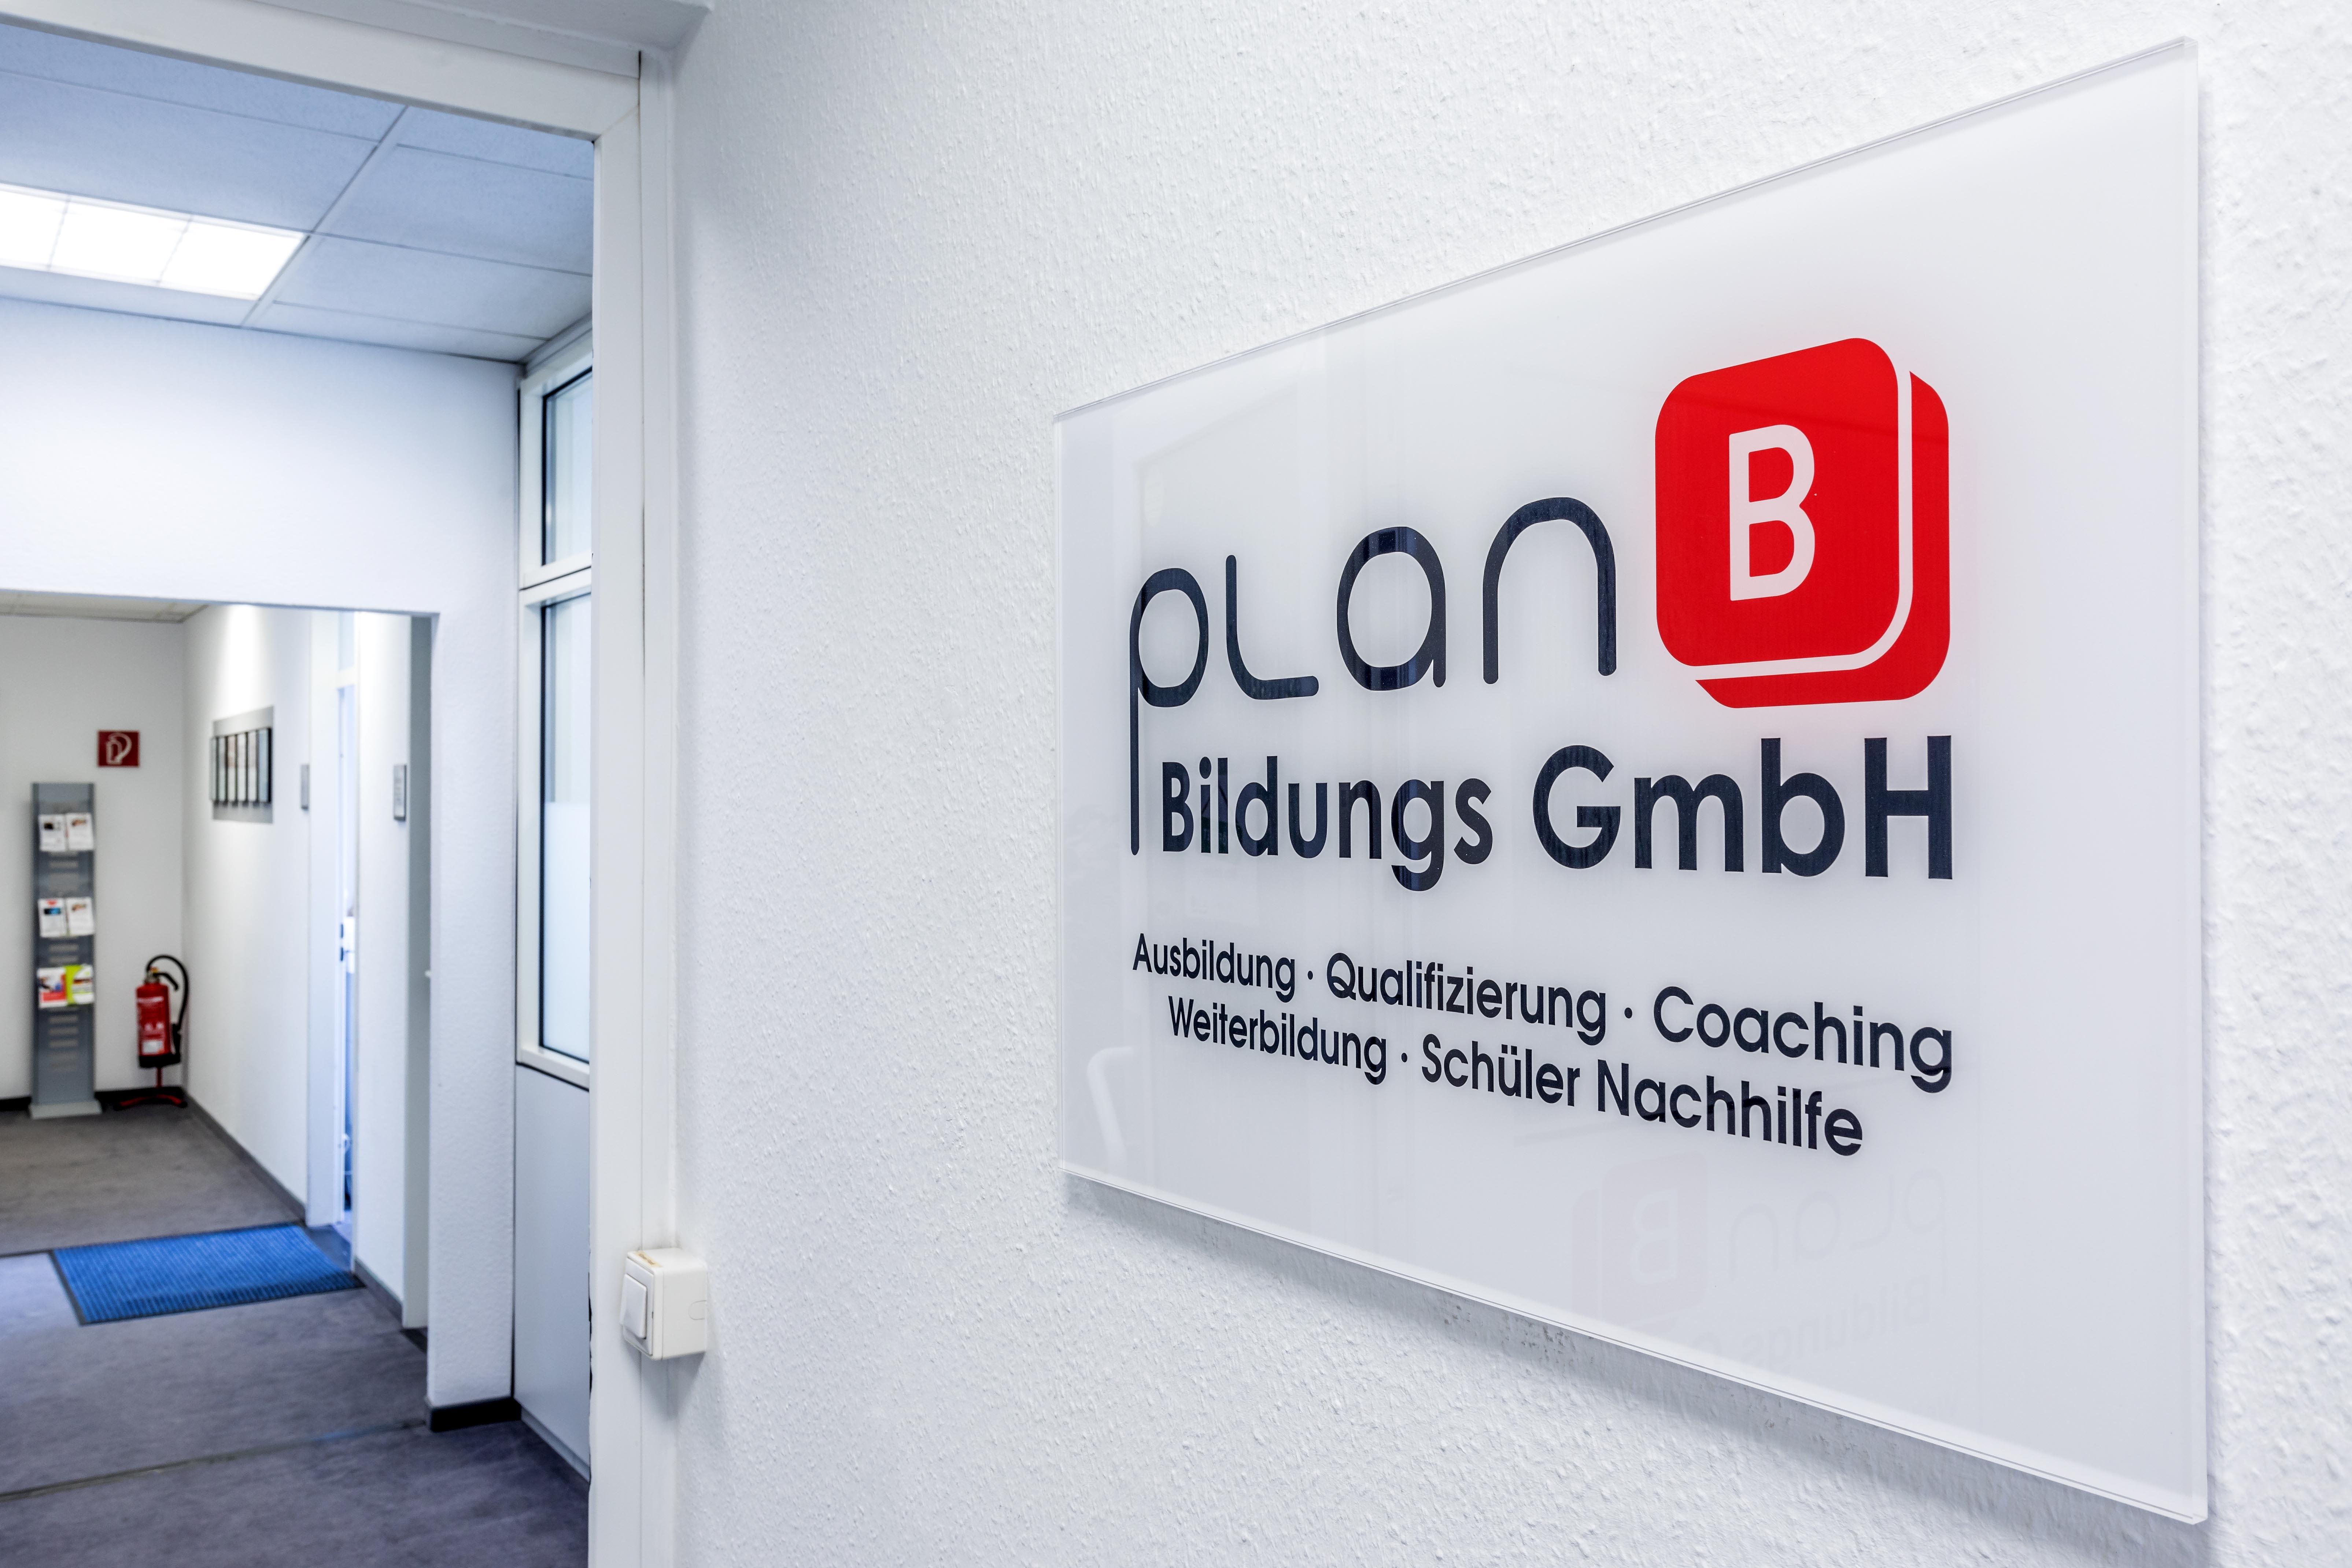 PlanB Bildungs GmbH, Hauptstr. 73 in Köln